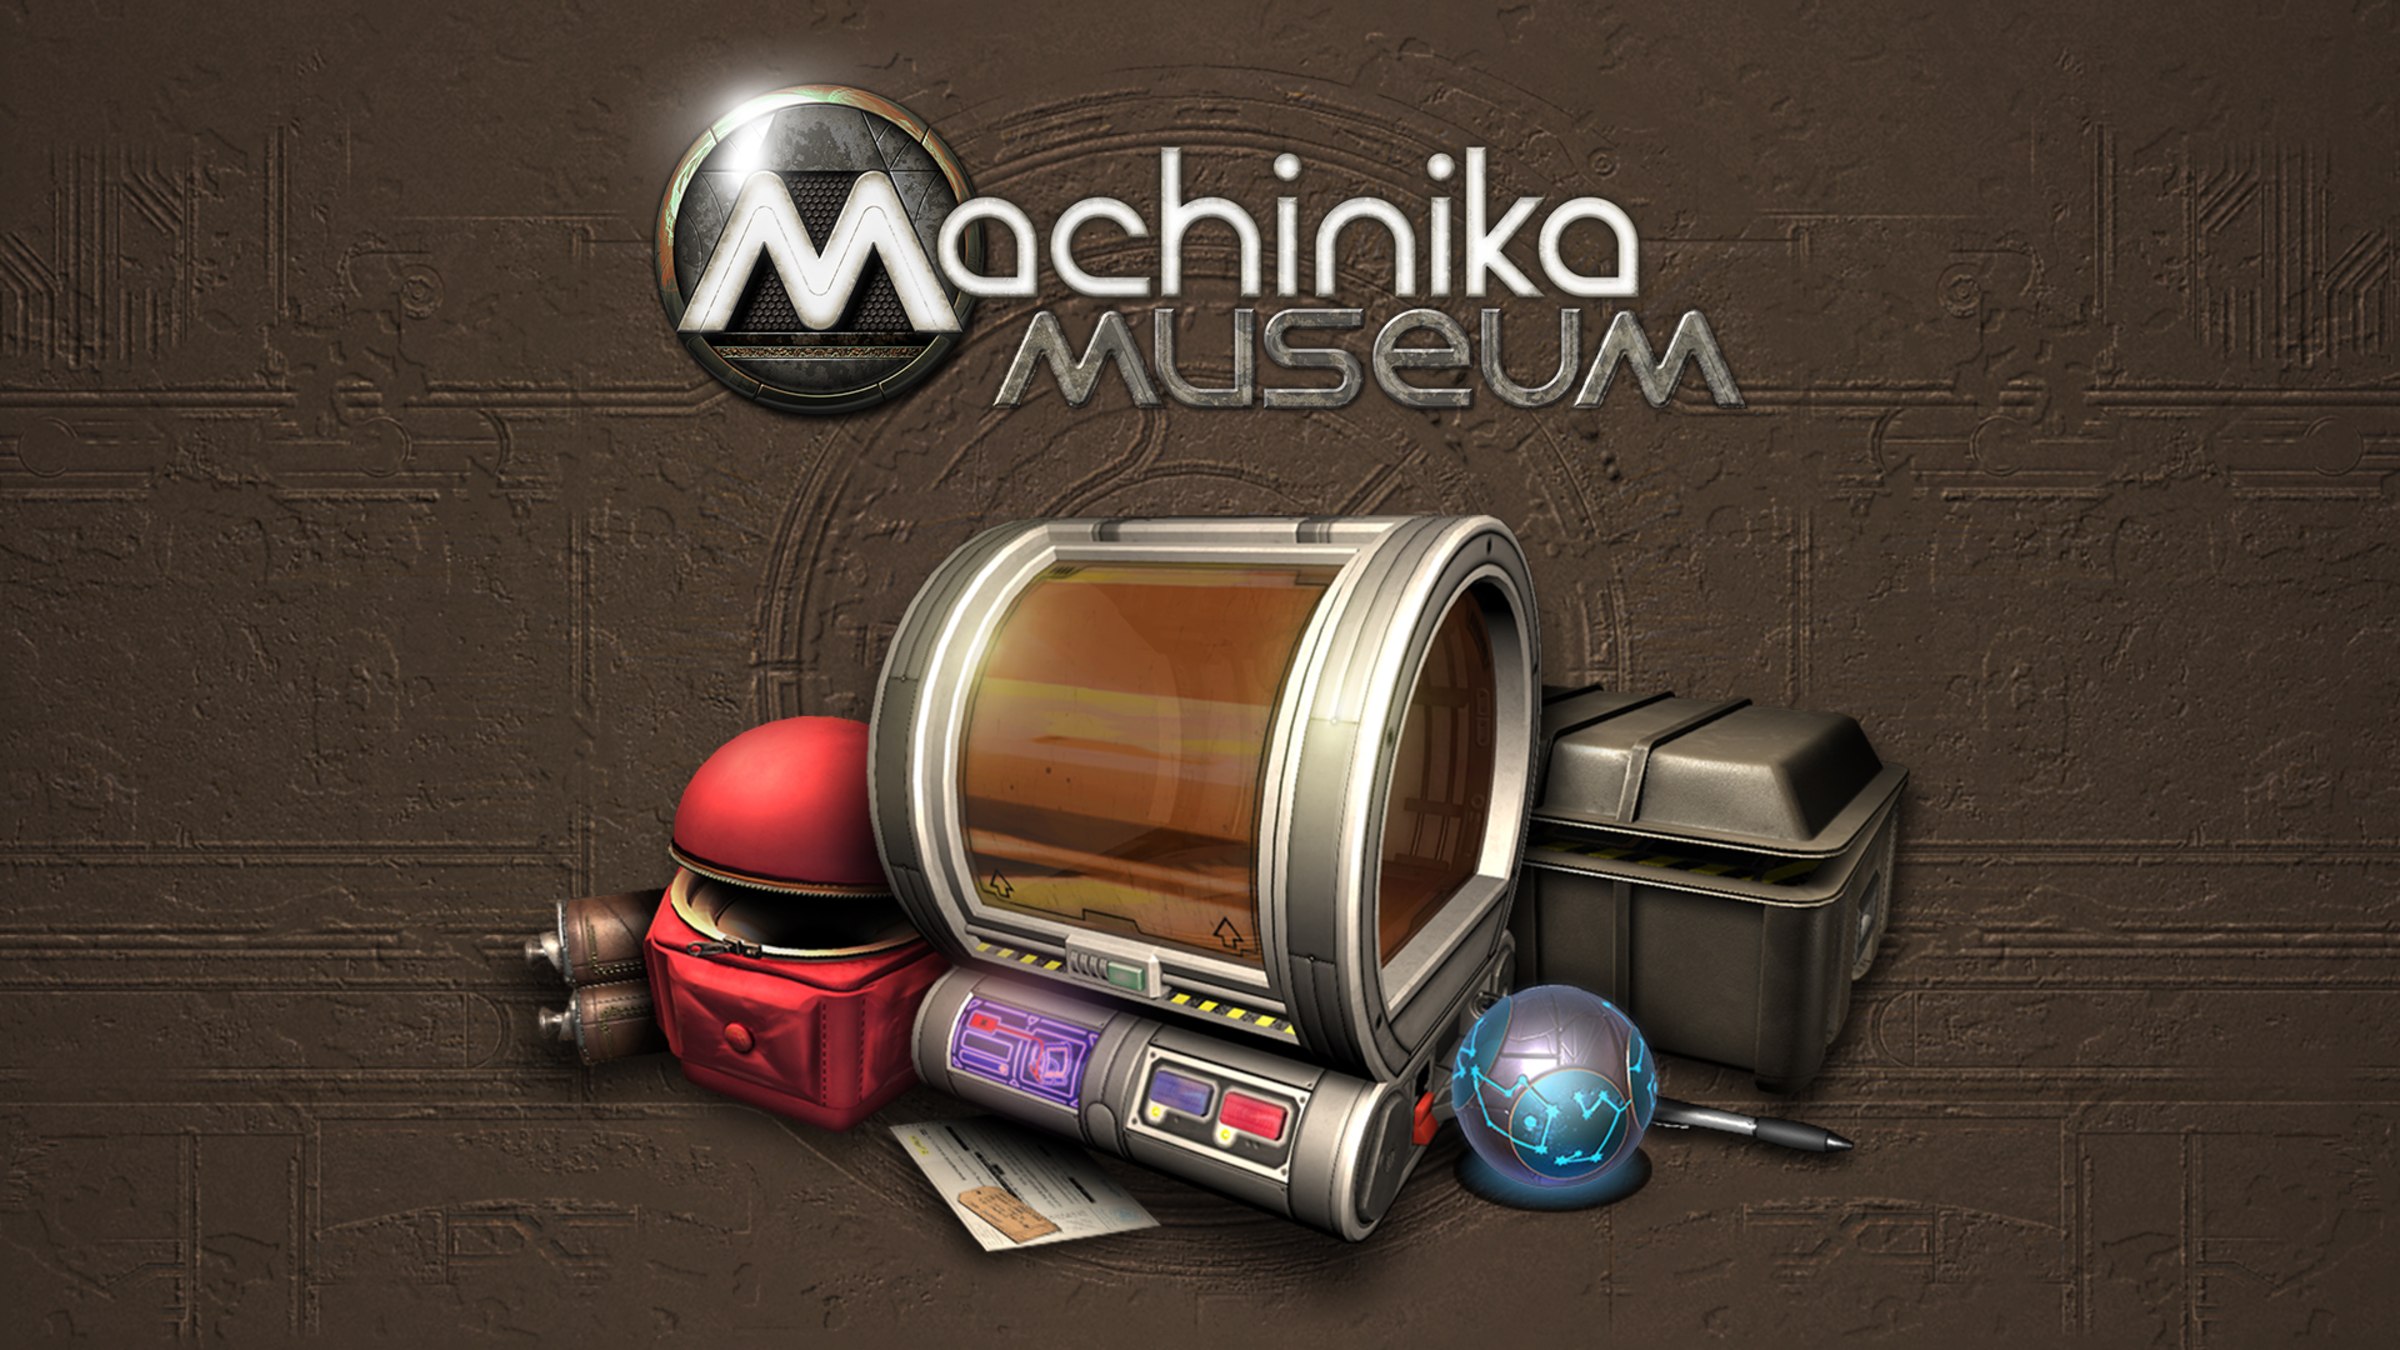 https://assets.nintendo.com/image/upload/c_fill,w_1200/q_auto:best/f_auto/dpr_2.0/ncom/en_US/games/switch/m/machinika-museum-switch/